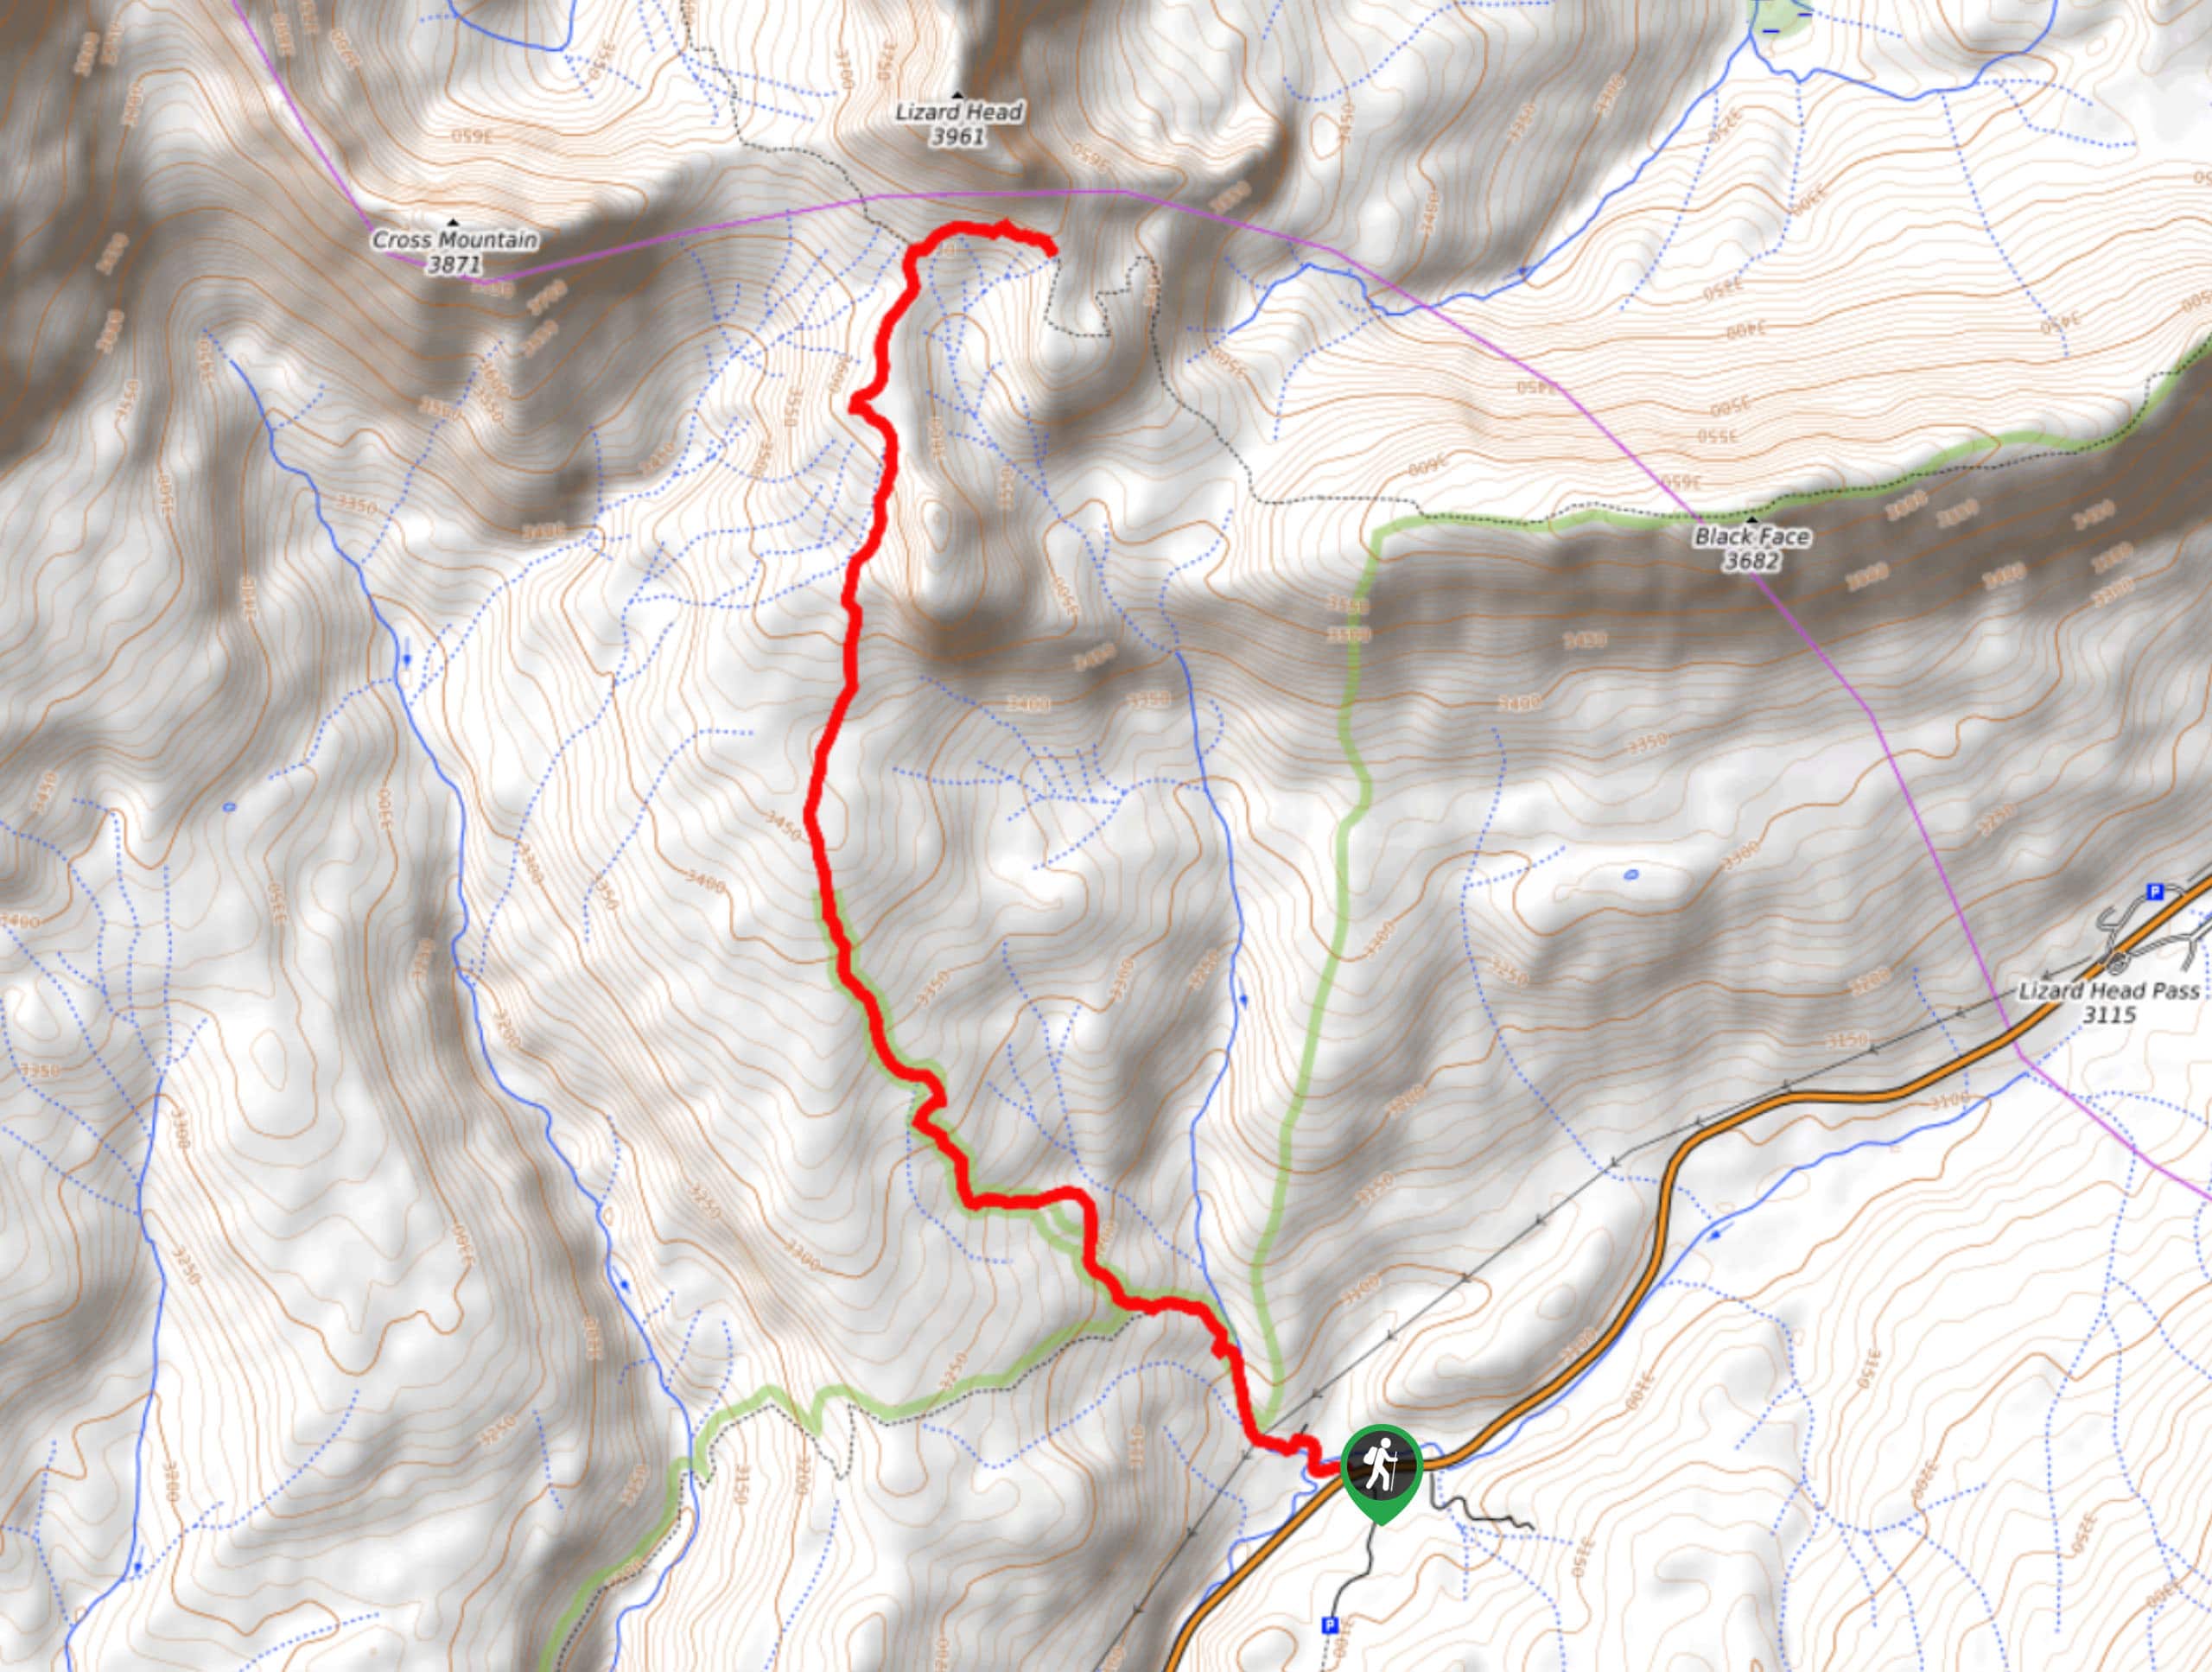 Cross Mountain Trail Map